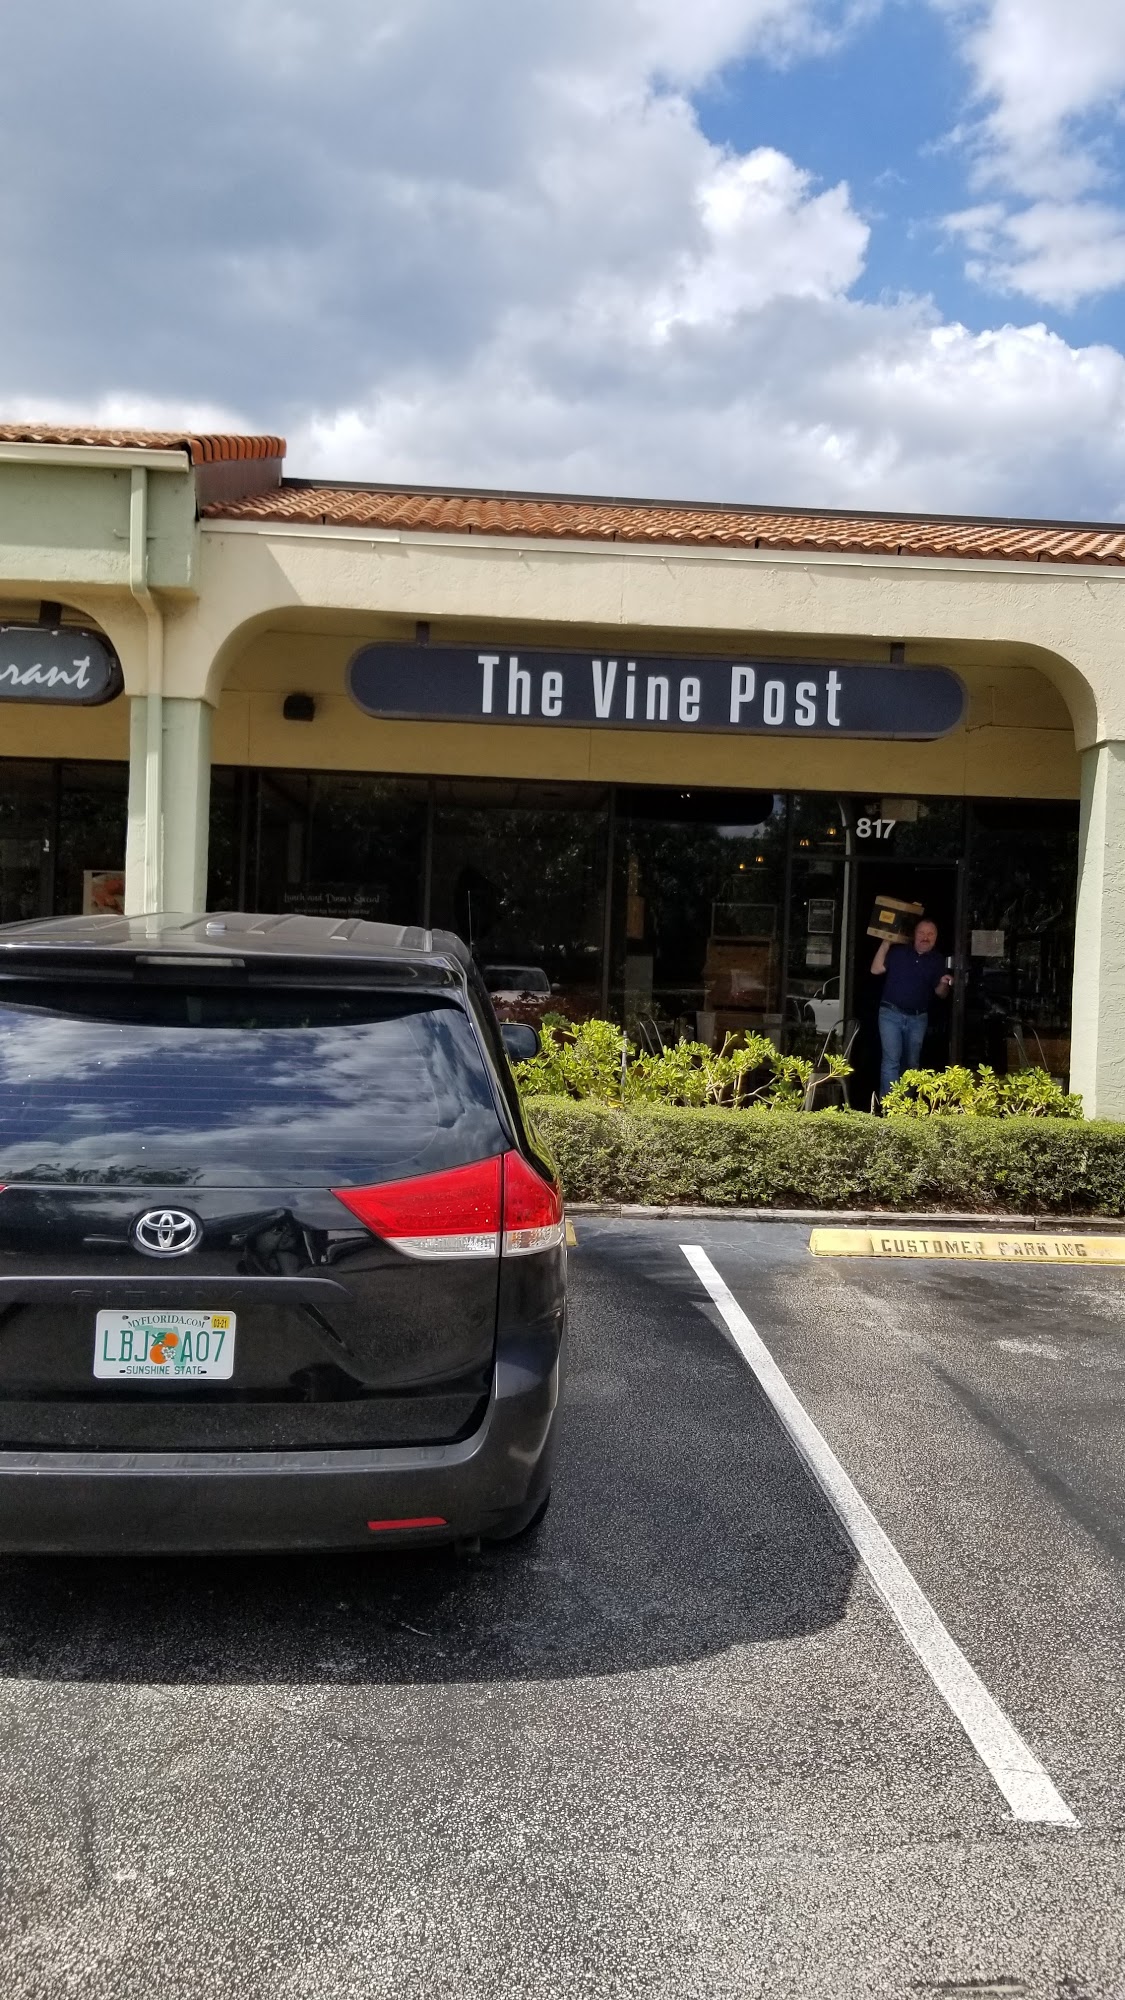 The Vine Post